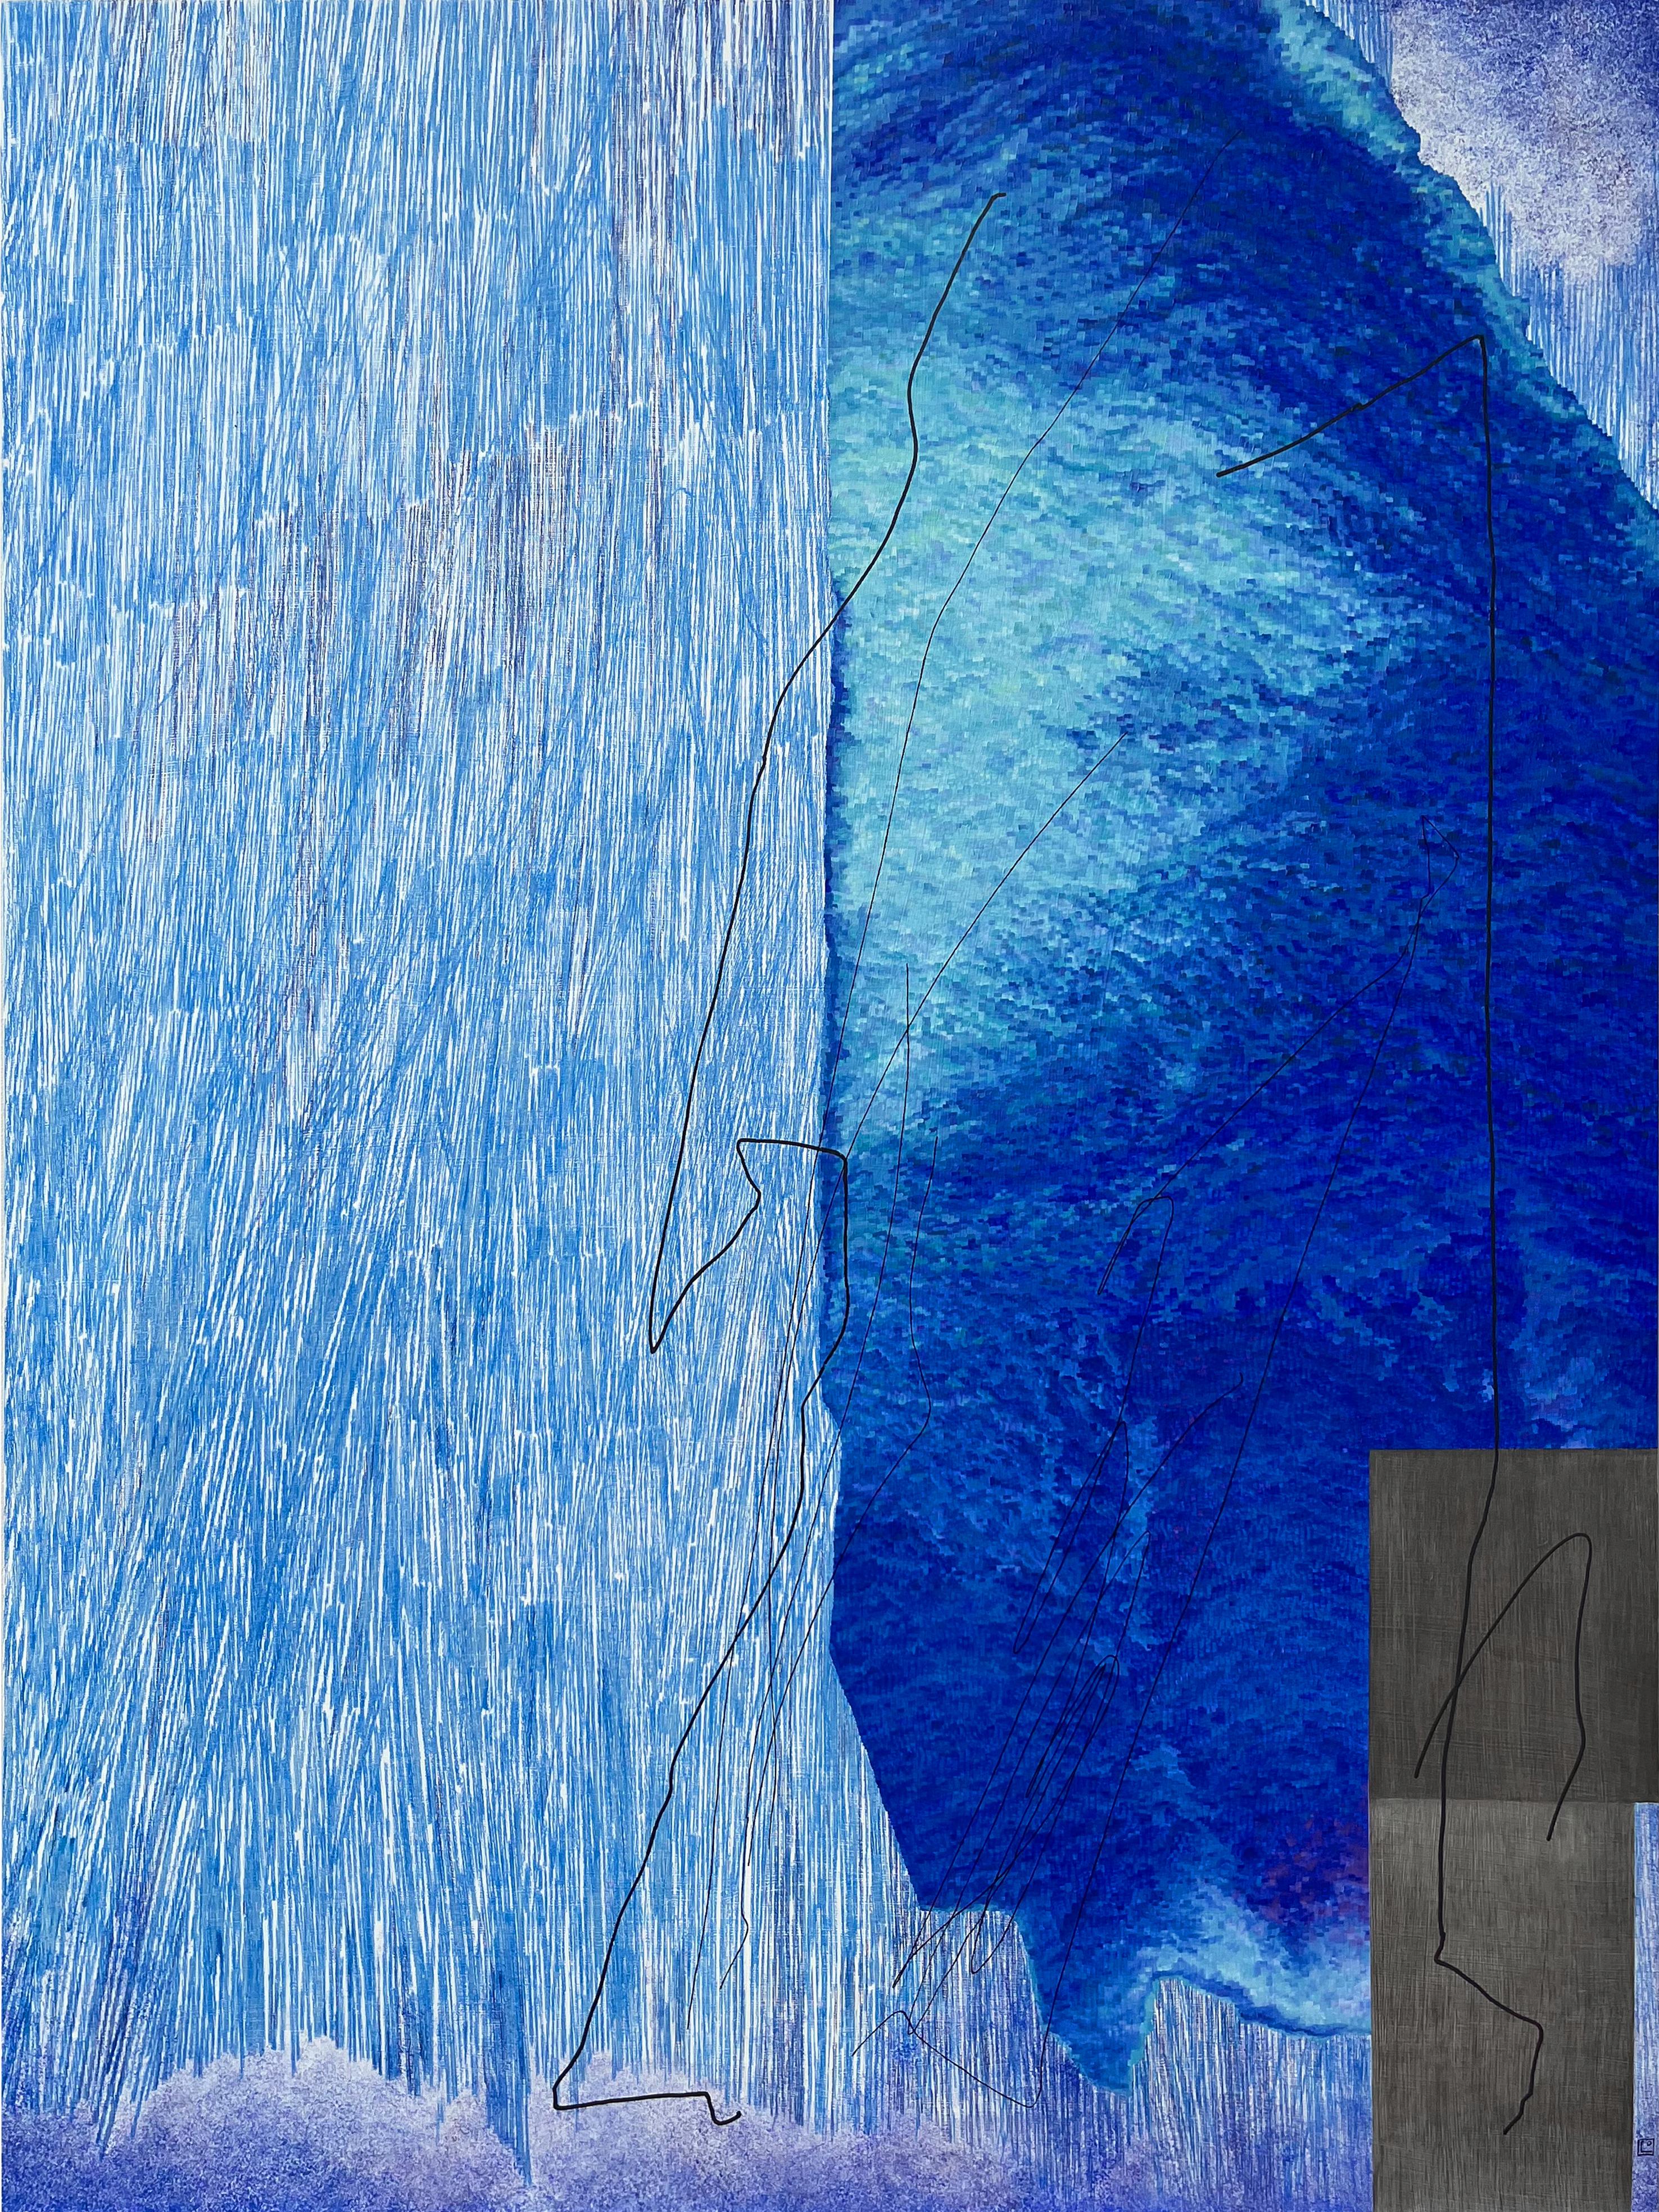 Art contemporain russe par Lena Ochkalova - Duality, bleu